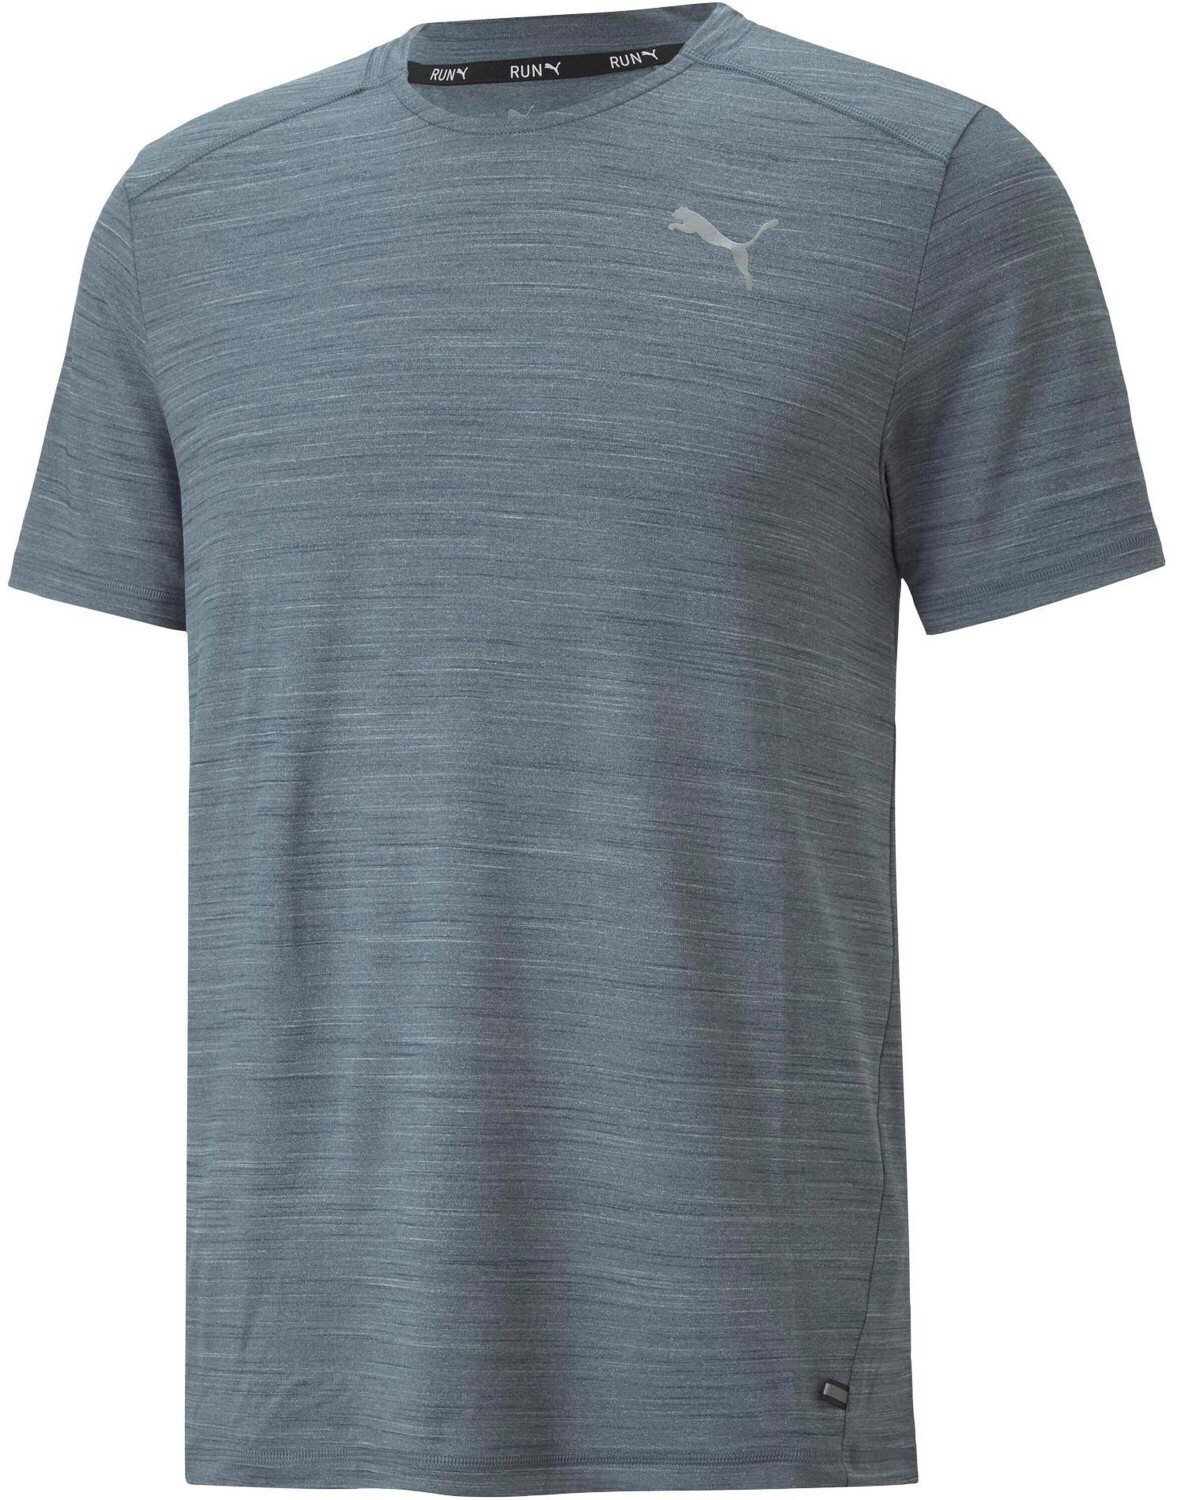 Puma Cloudspun Running Shirt Men (522402) ab 17,99 € | Preisvergleich bei